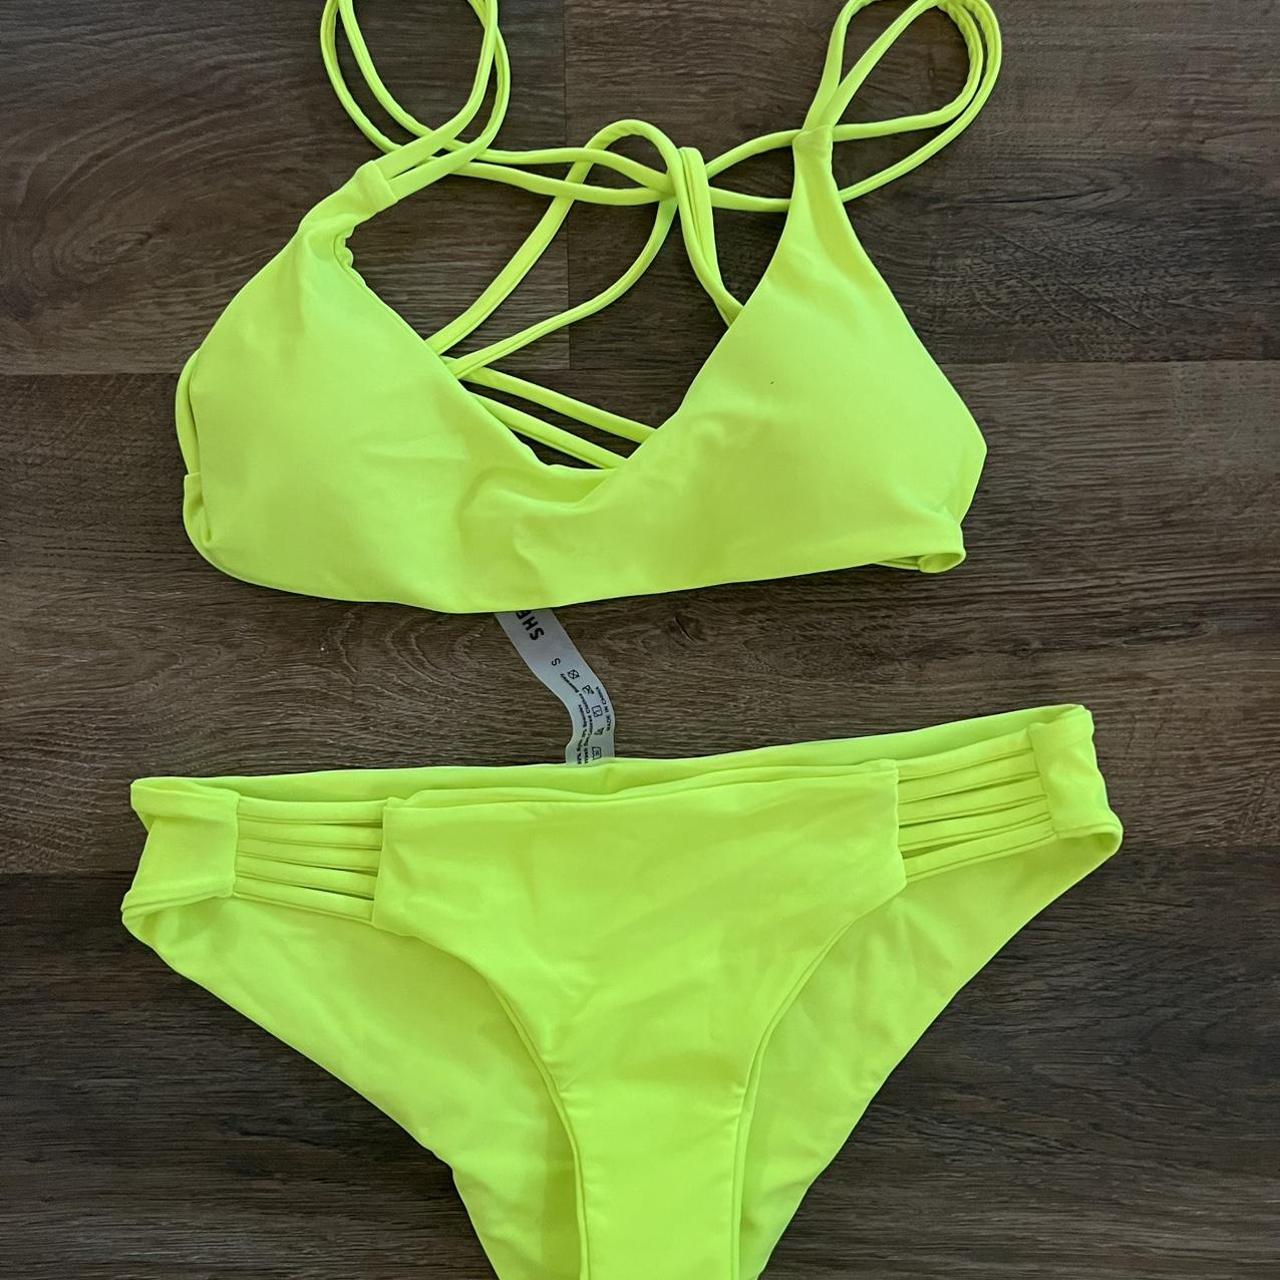 Neon Lime Green Bikini In A Size Small Depop